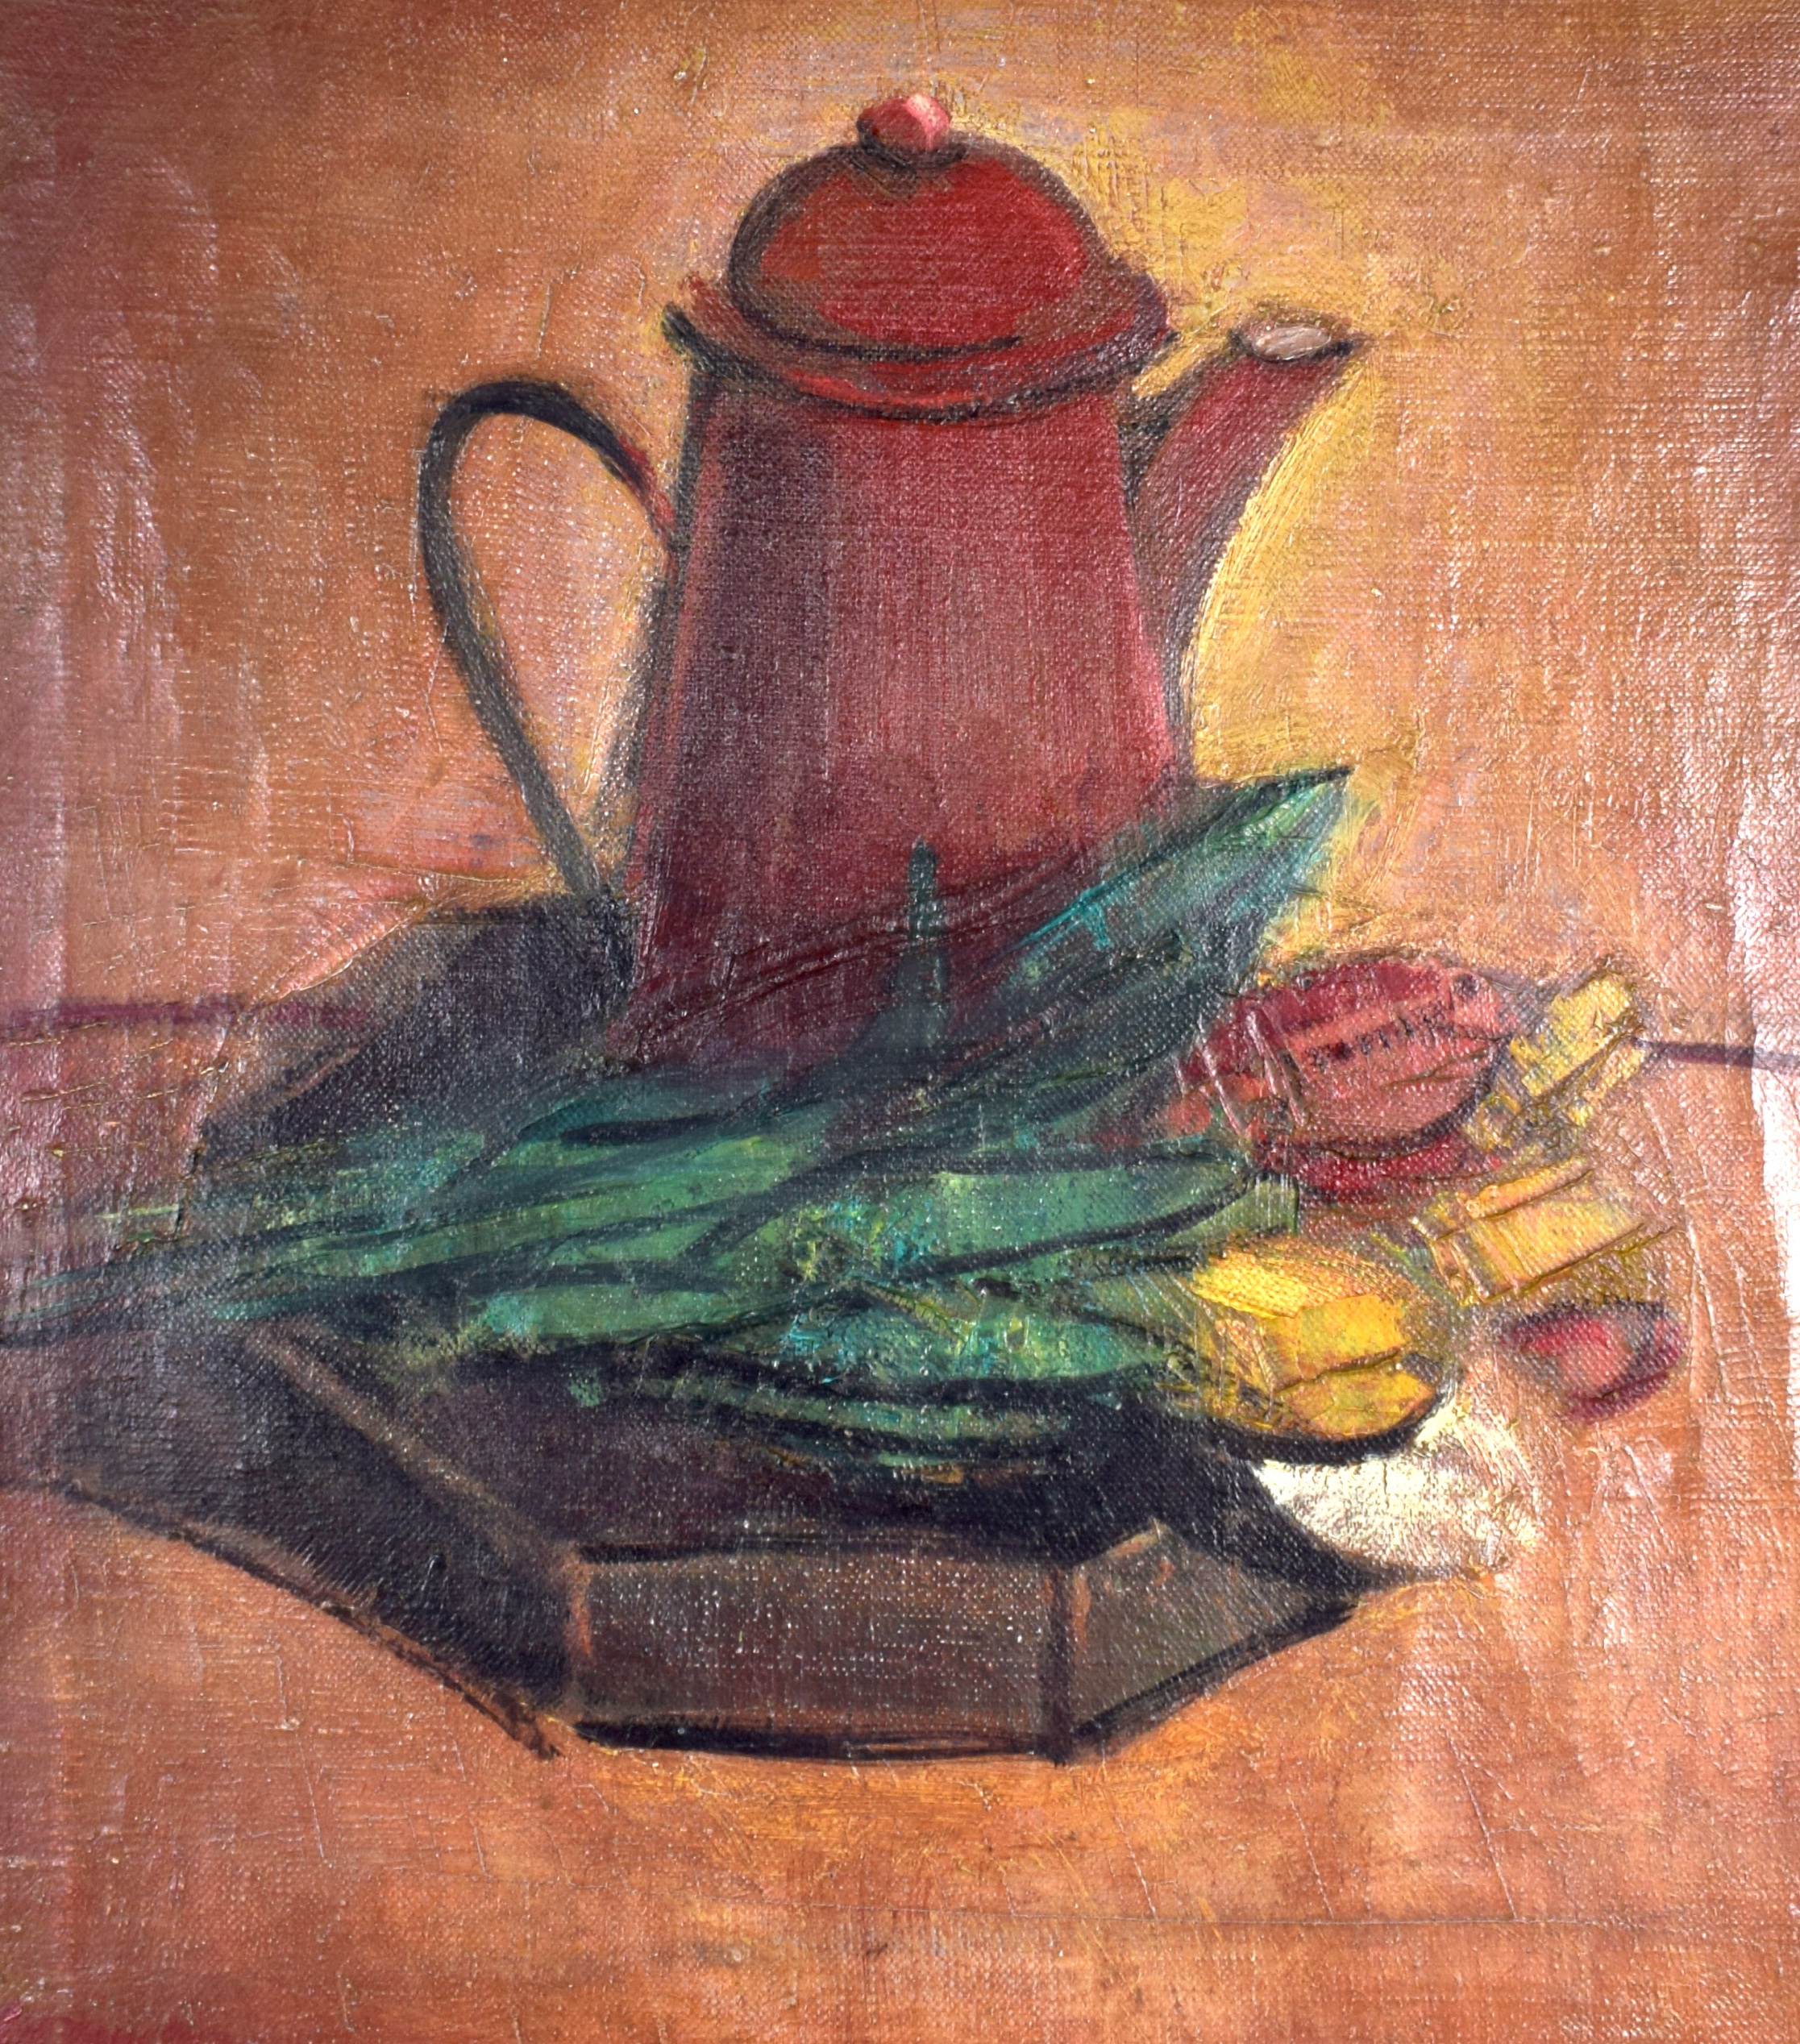 DES GORMAN (Scottish), framed oil on canvas, signed, "Red Coffee Pot & Tulips". 51 cm x 45 cm.